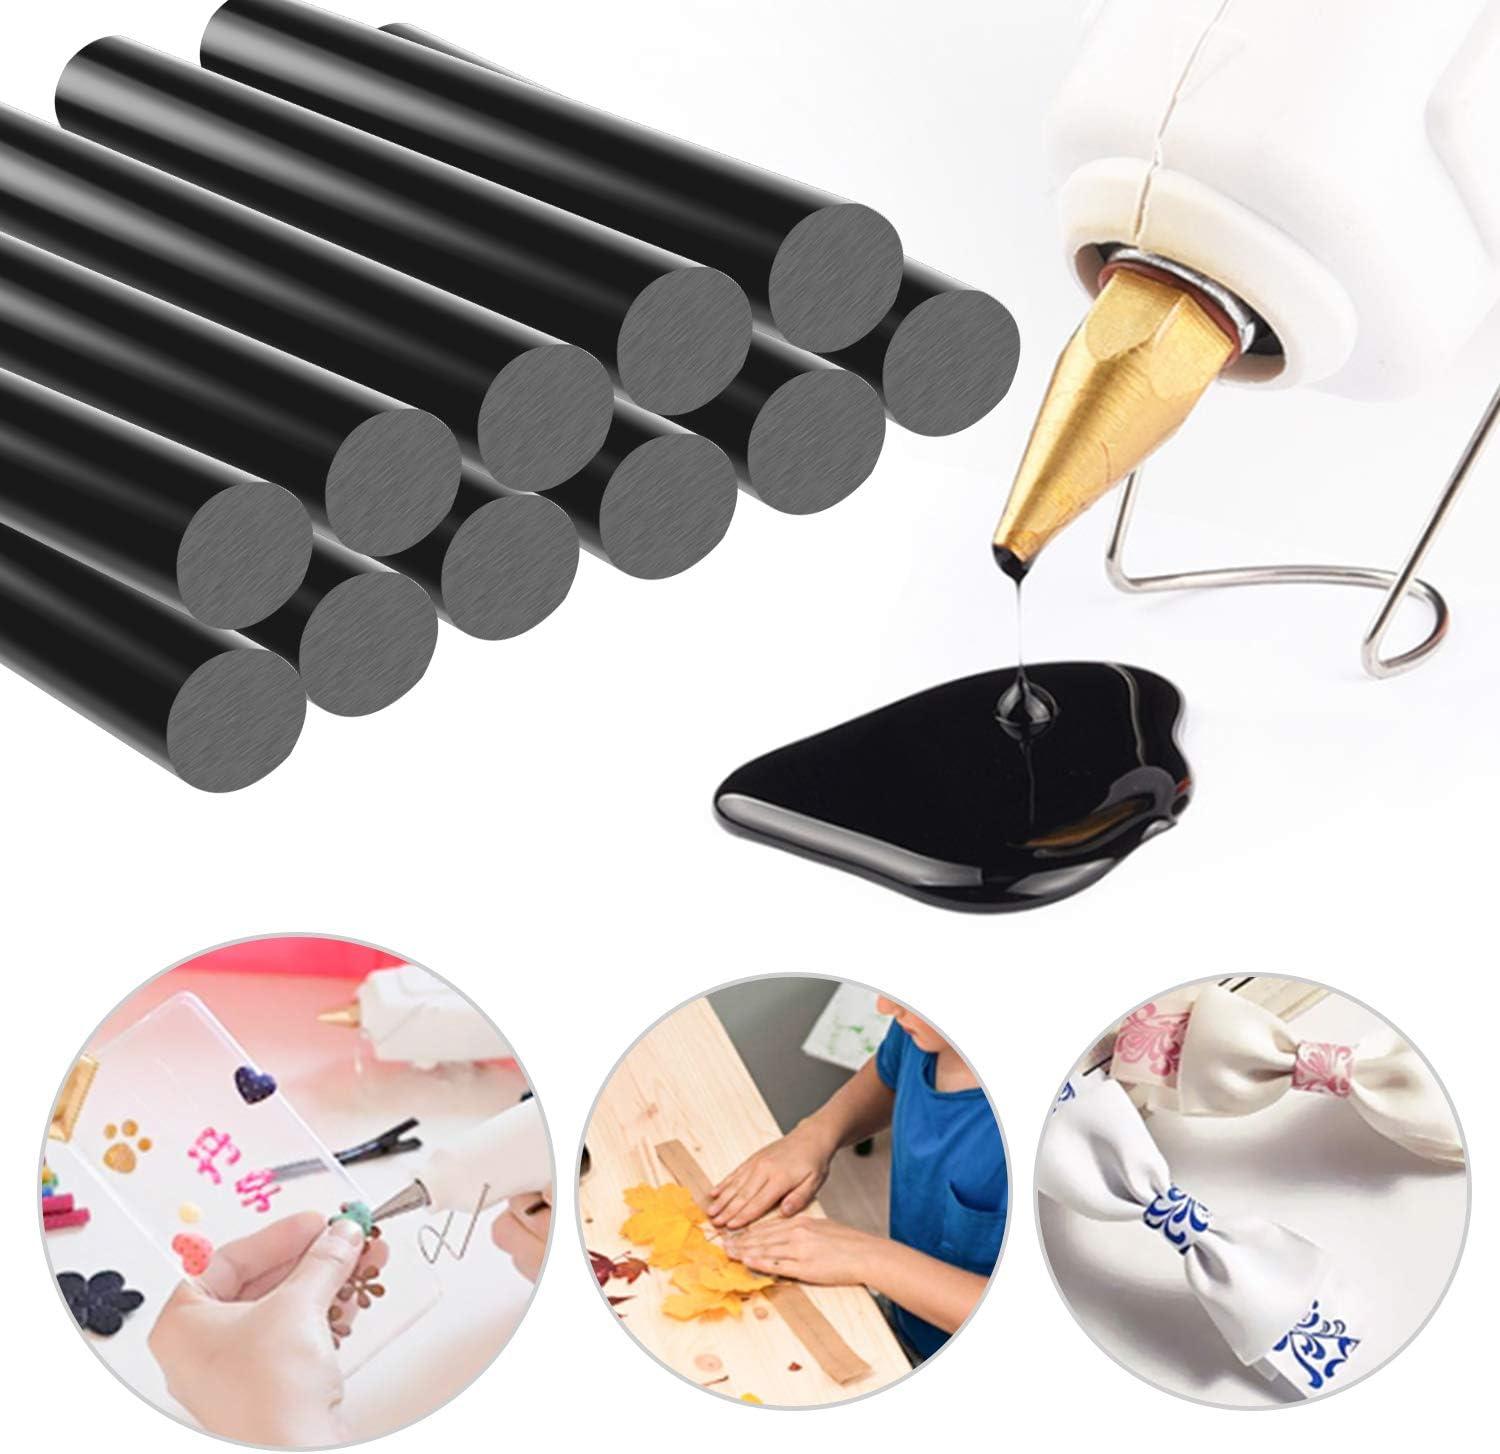  Black Hot Glue Sticks Full Size, ENPOINT 24 PCS 4 Long x  0.43 Dia Hot Melt Glue Sticks for Craft, Fabric Adhesive Glue Sticks for  DIY, Decoration, Car Dent Repair